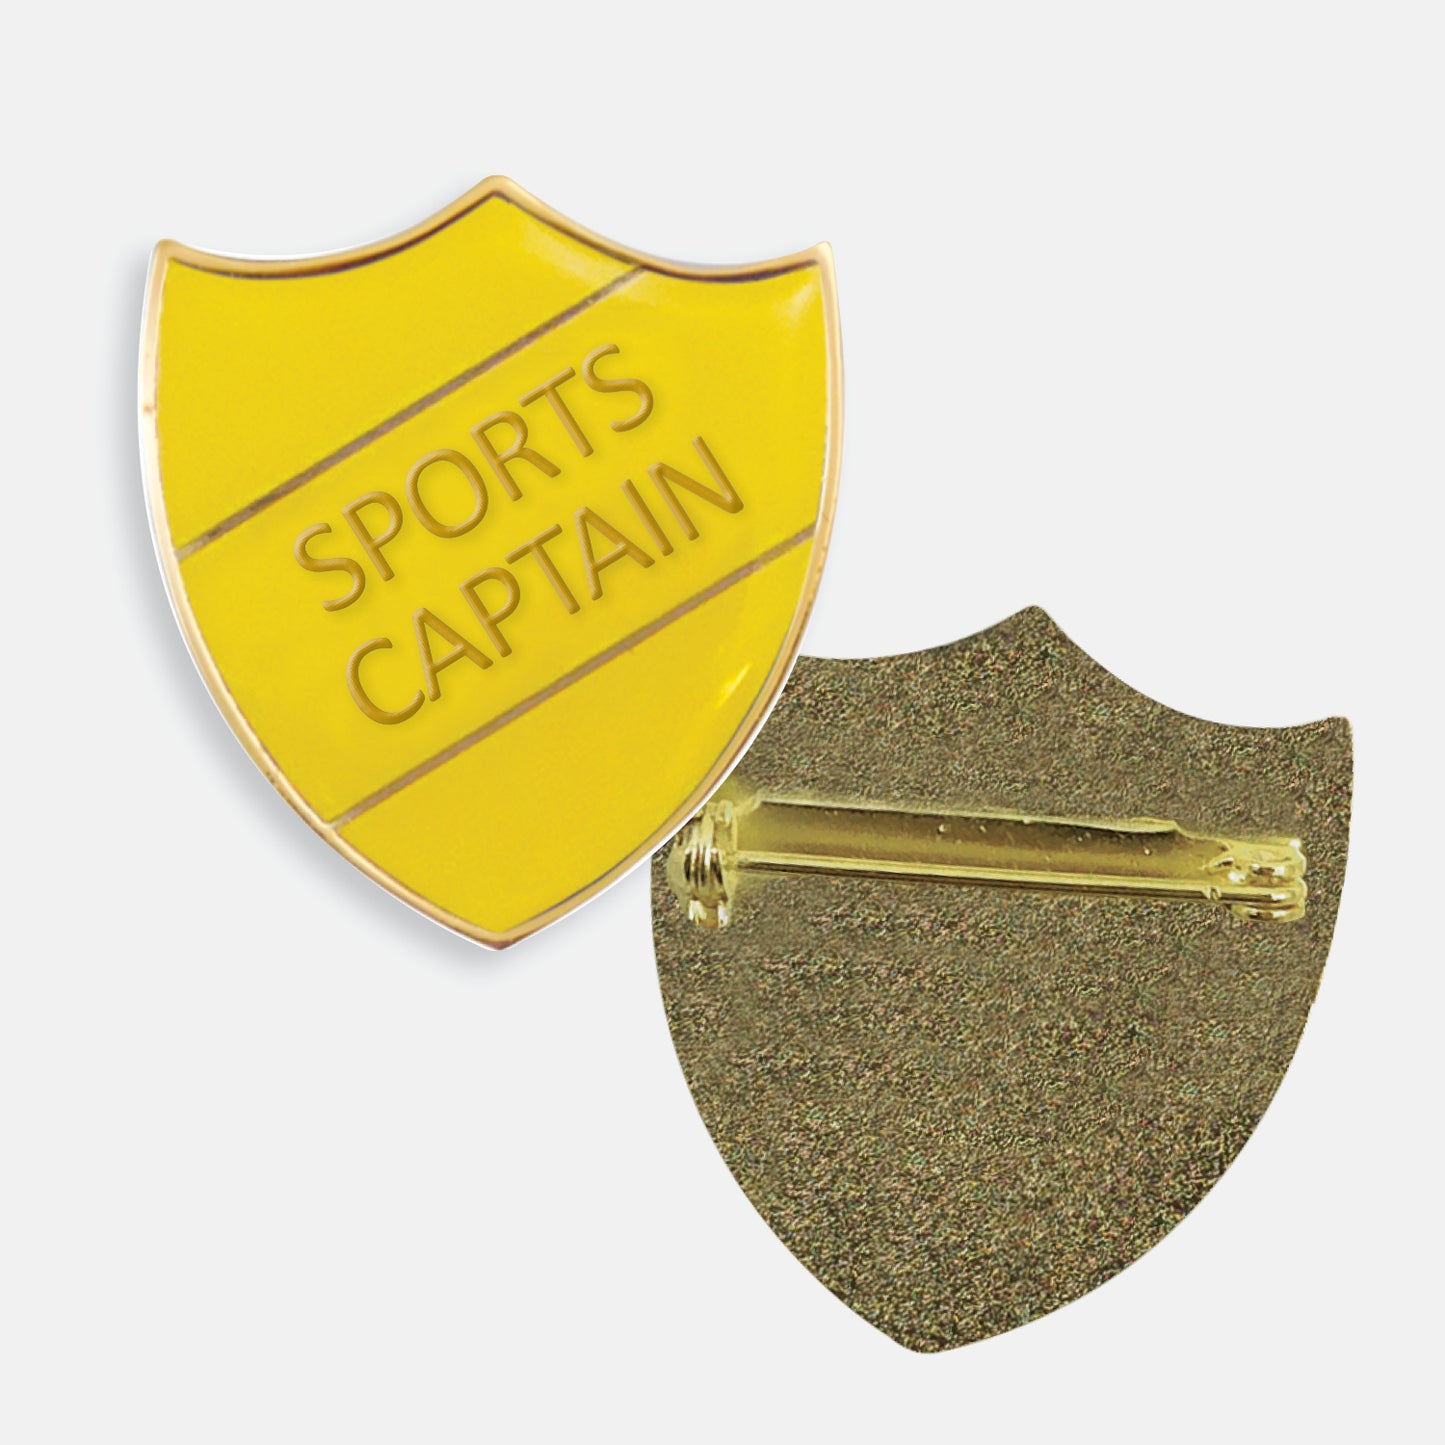 Enamel Sports Captain Shield Badge